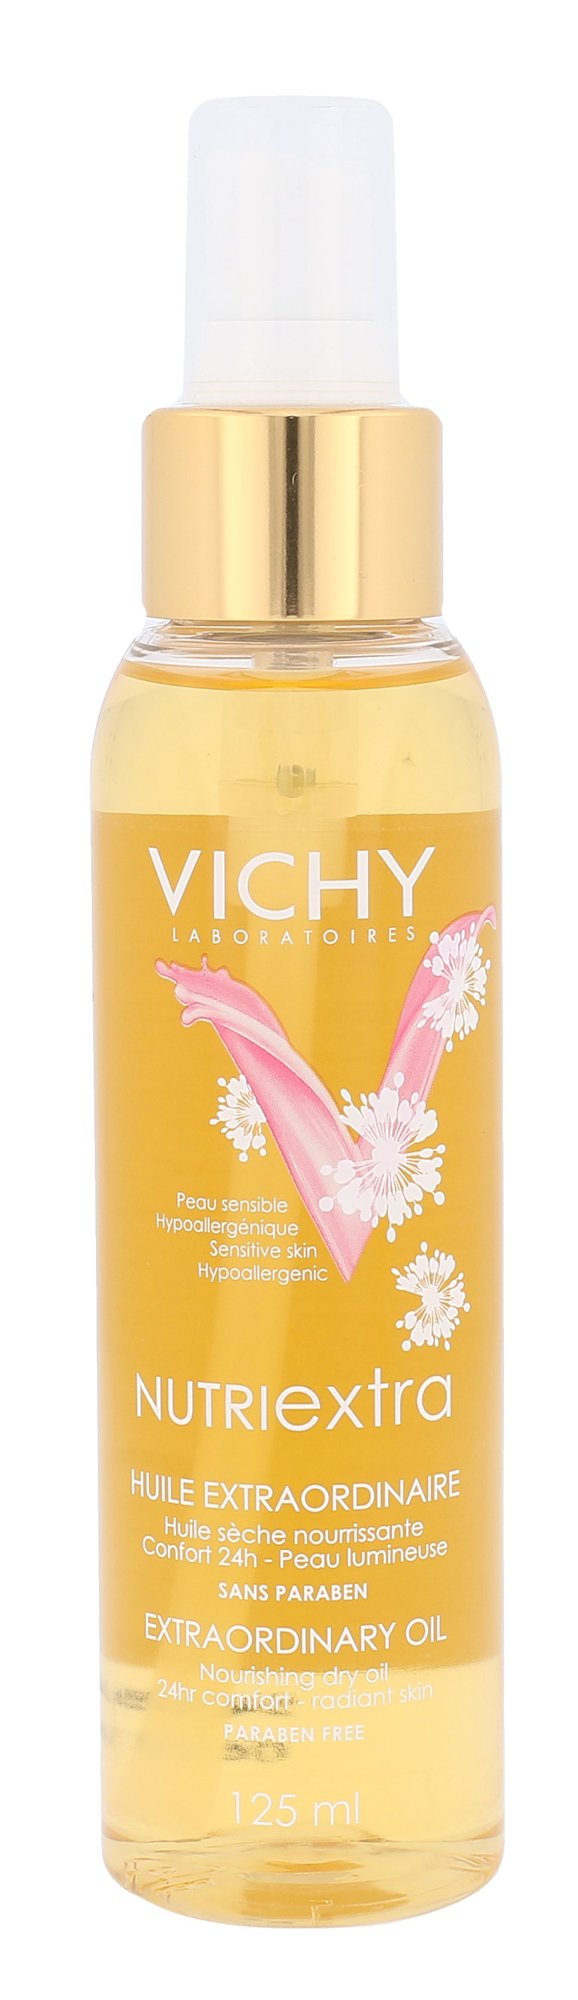 Vichy Nutriextra kūno aliejus